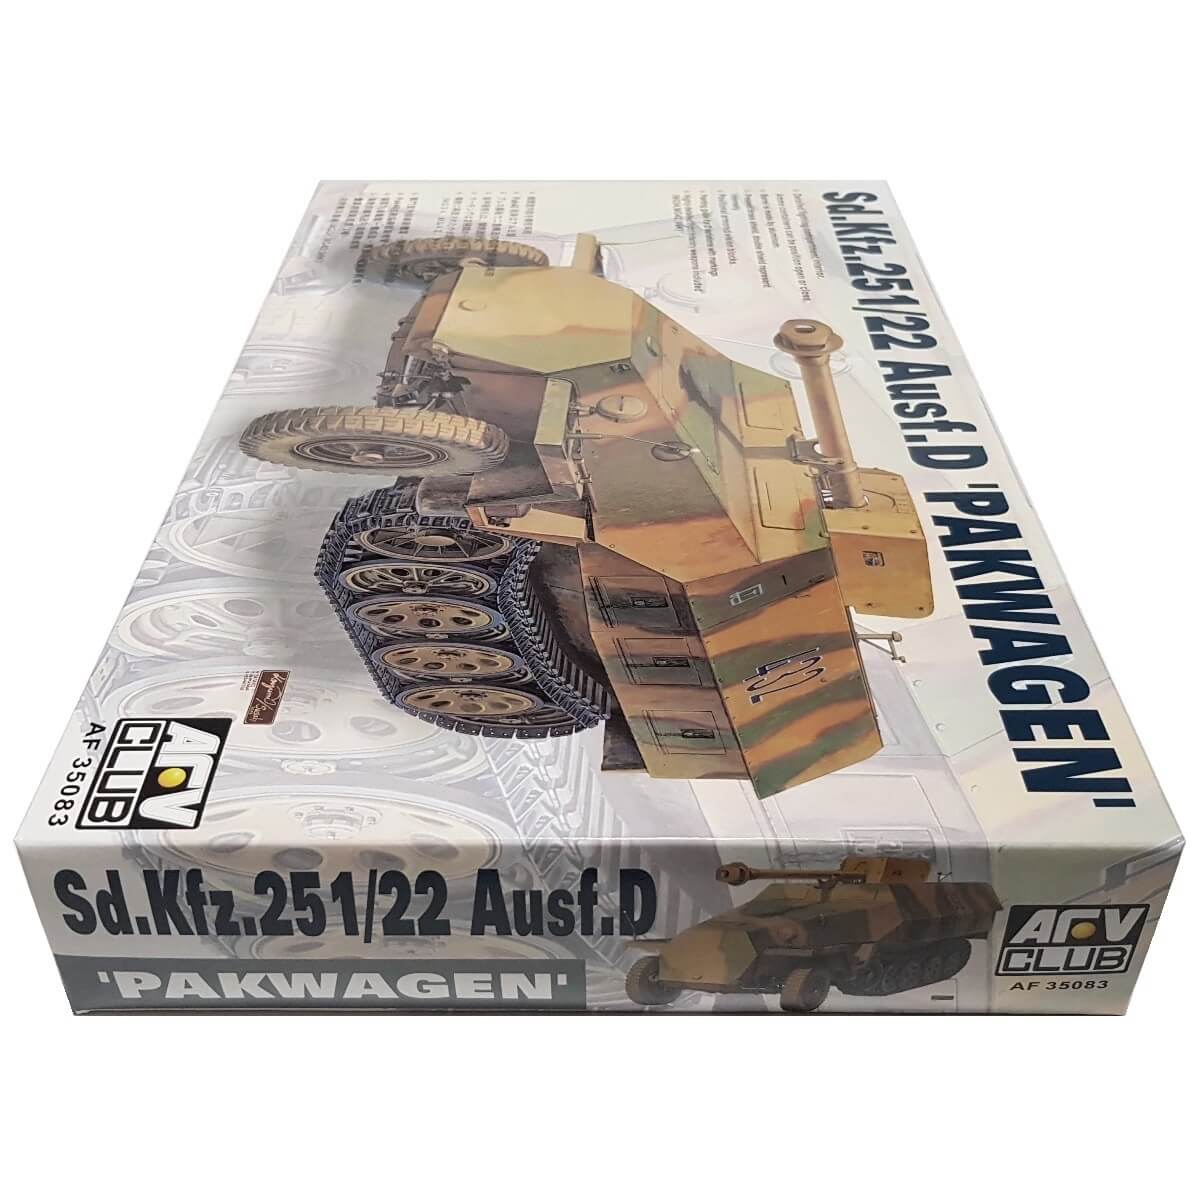 1:35 Sd.Kfz. 251/22 Ausf. D Pakwagen - AFV CLUB